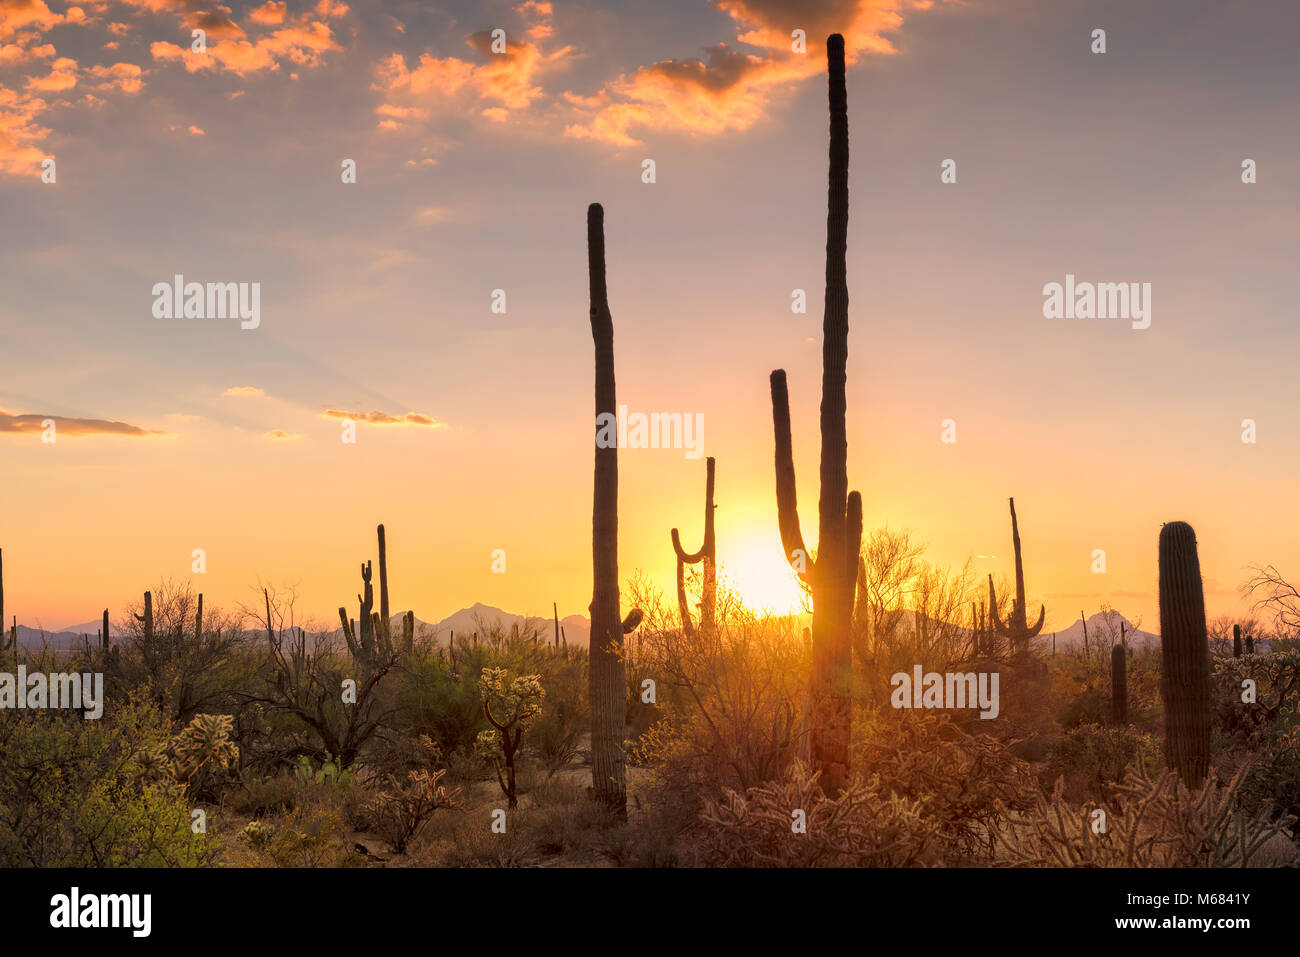 Sunset view of the Saguaro cacti in Sonoran Desert near Phoenix, Arizona. Stock Photo